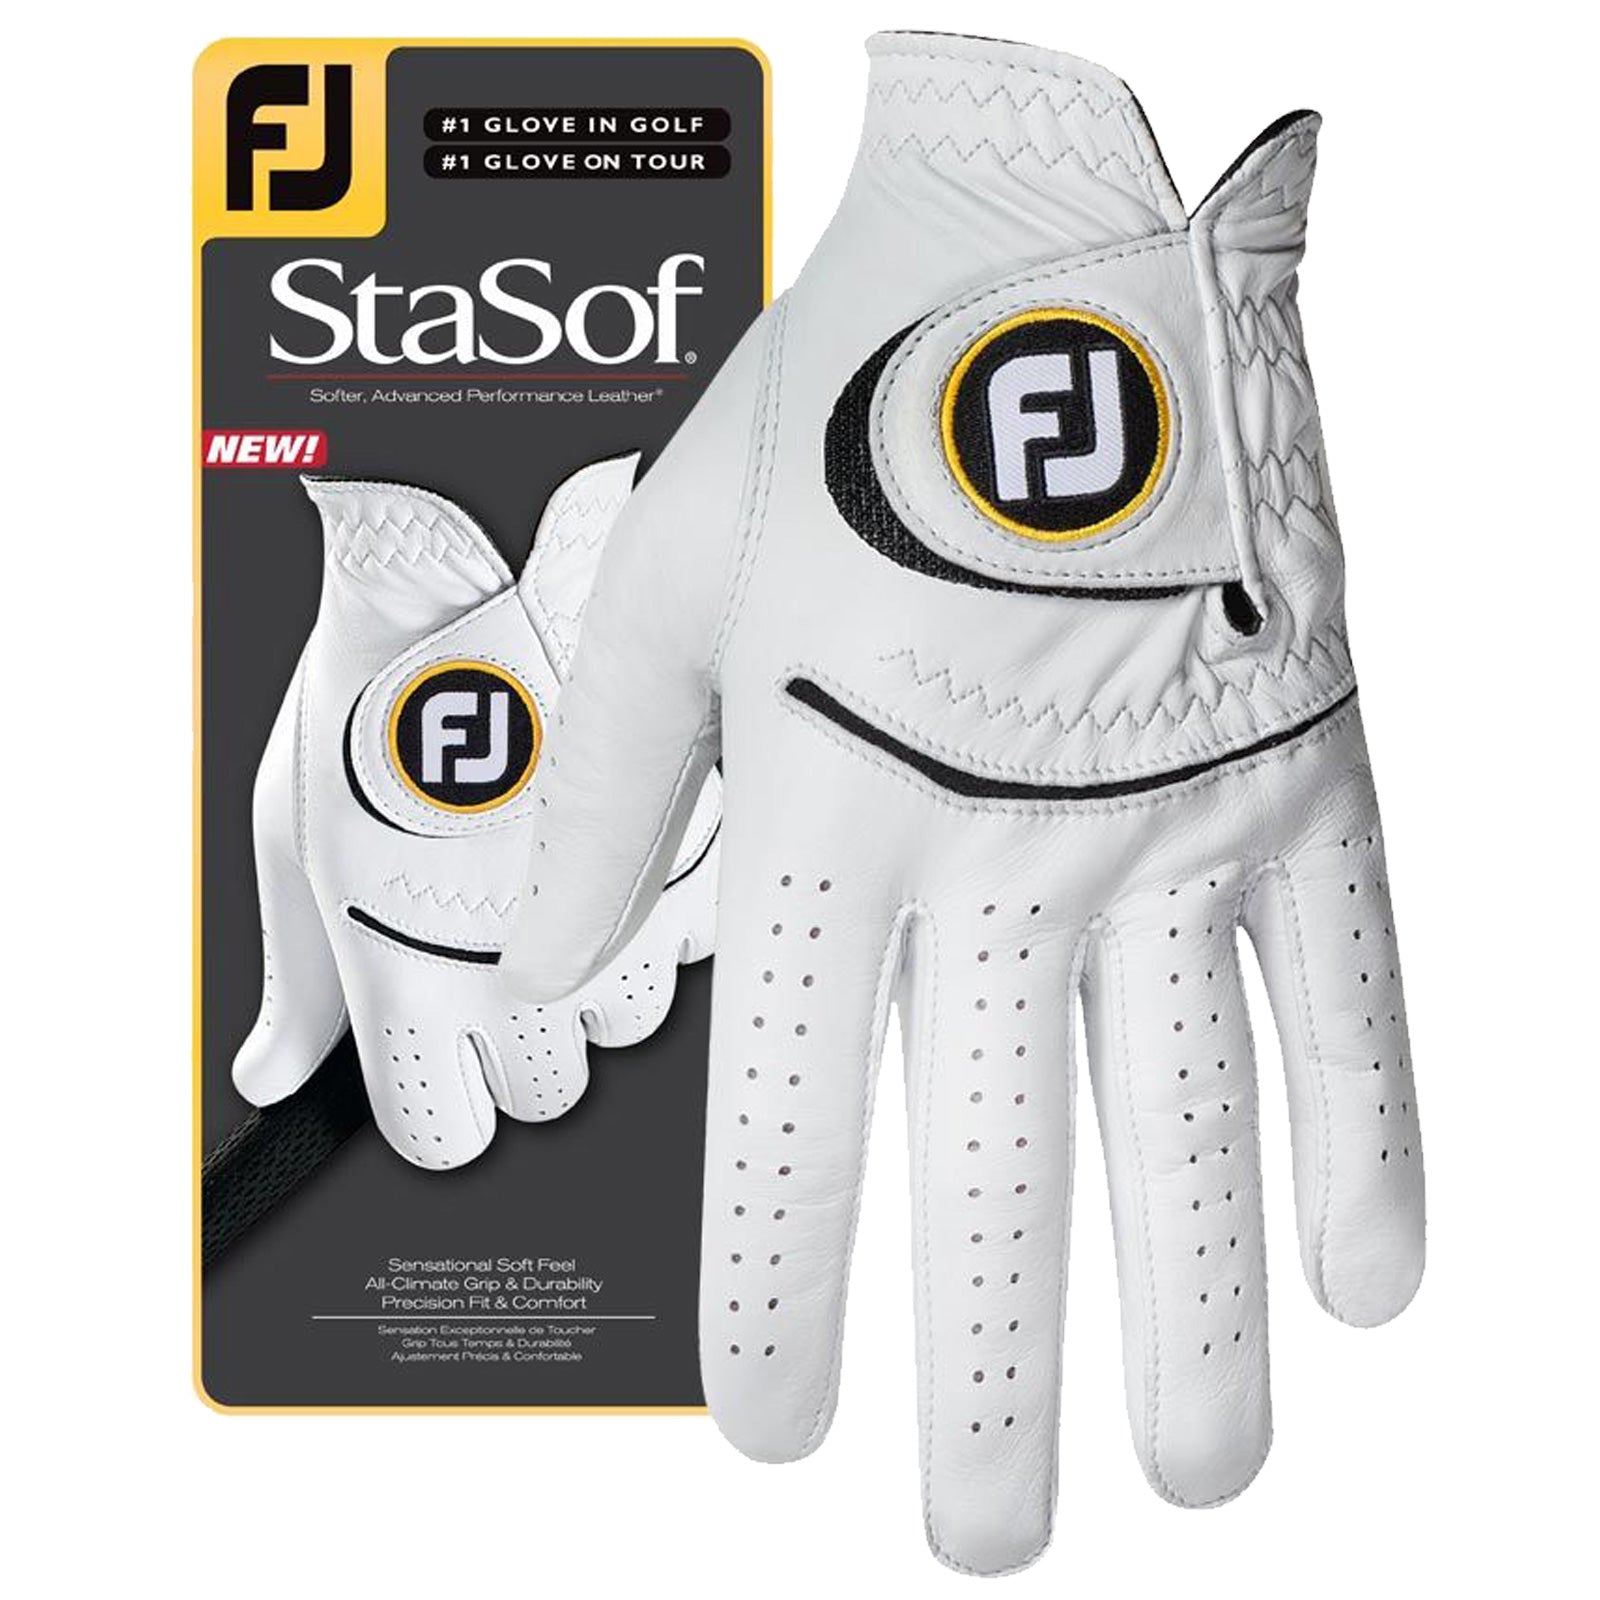 FootJoy Mens StaSof Left Hand Golf Glove RRP 19.95 CLEARANCE XL 12.99